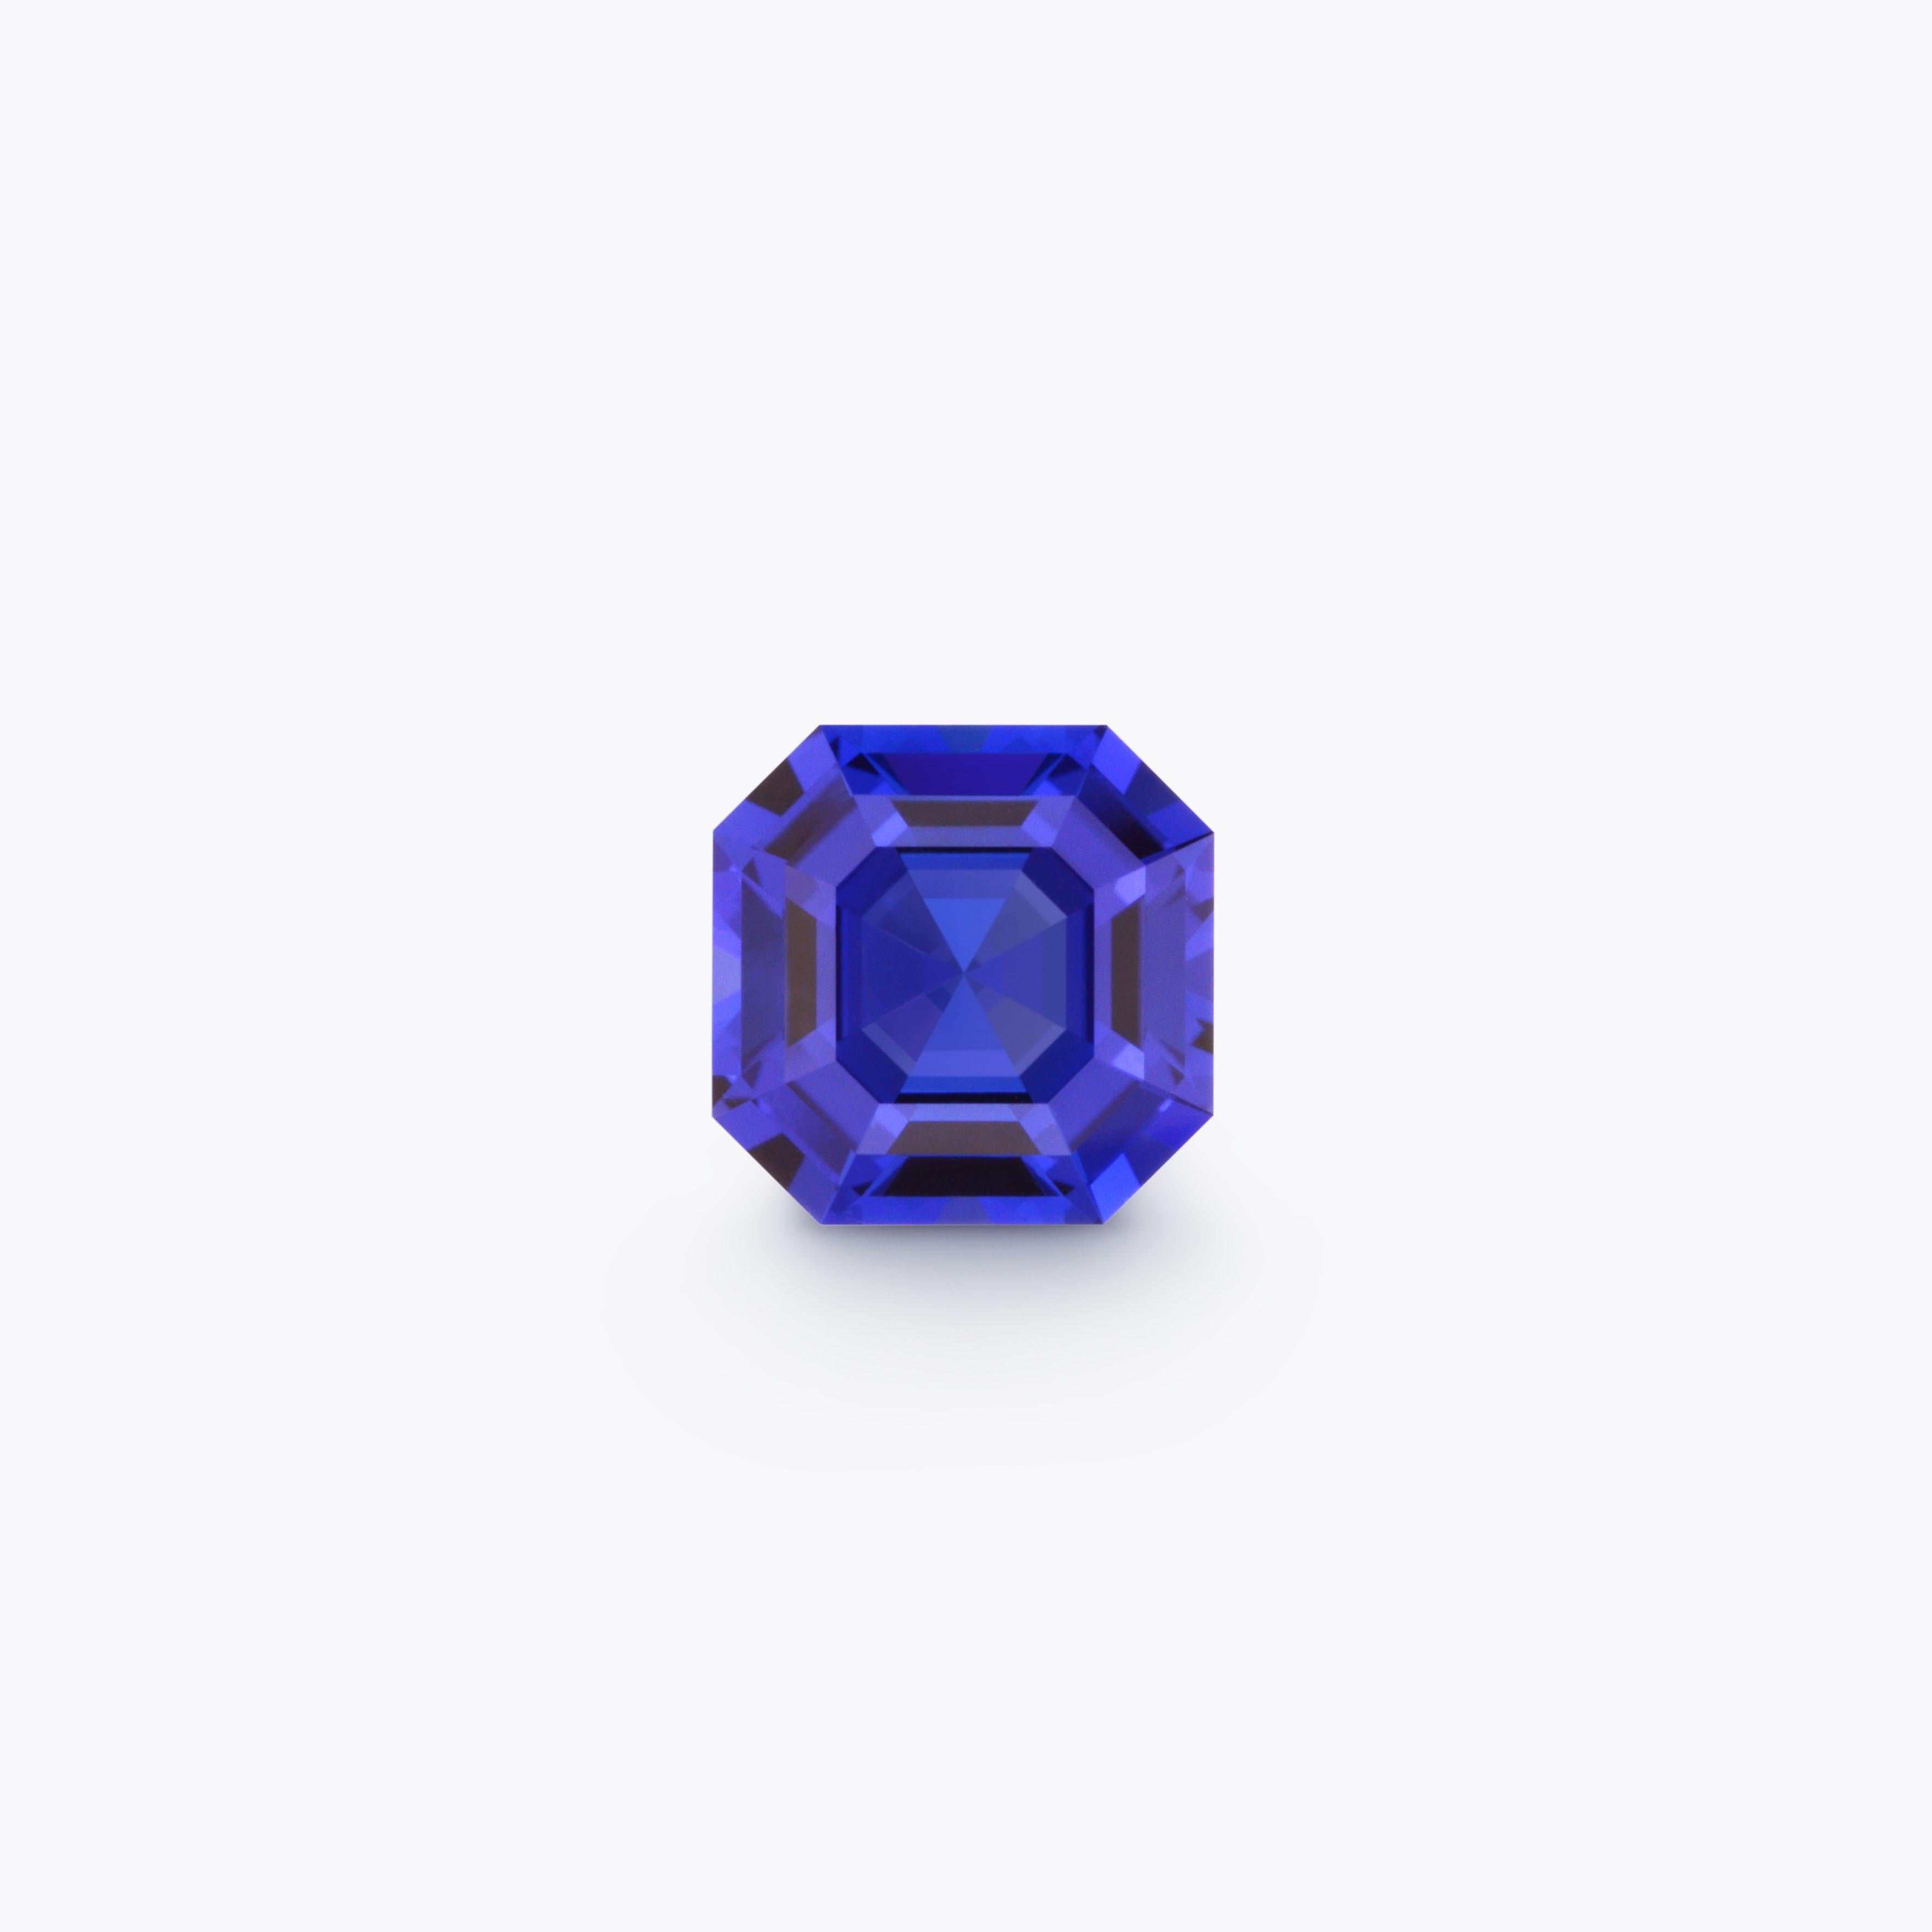 Contemporary Tanzanite Ring Gem 10.41 Carat Square Octagon Unmounted Loose Gemstone